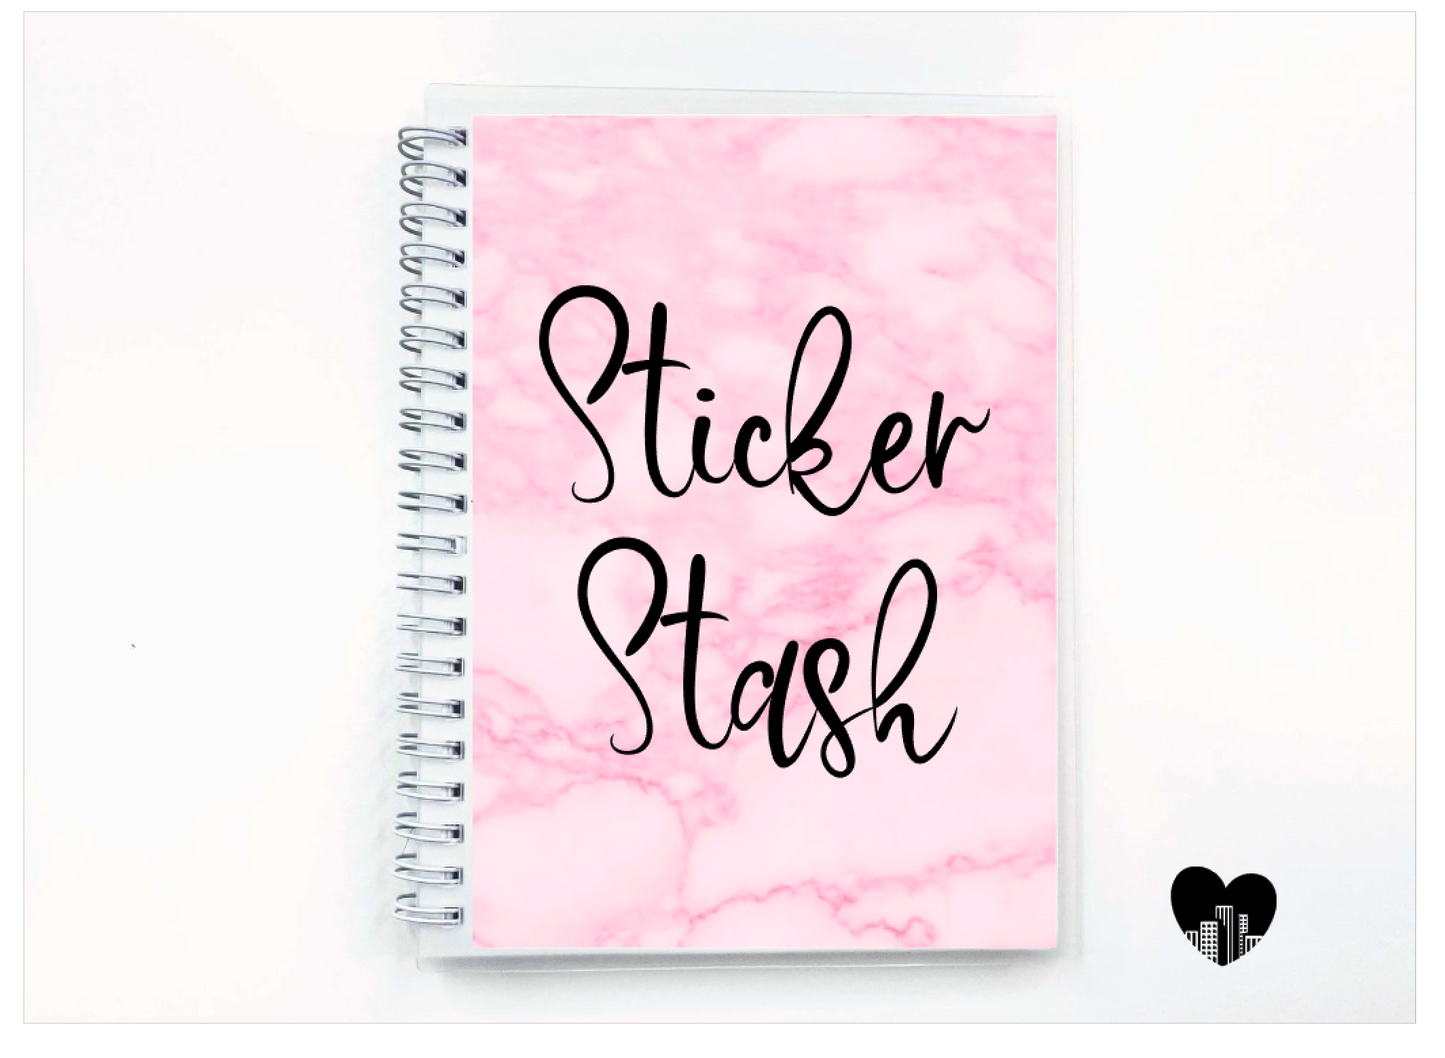 Sticker Stash Reusable Sticker Book